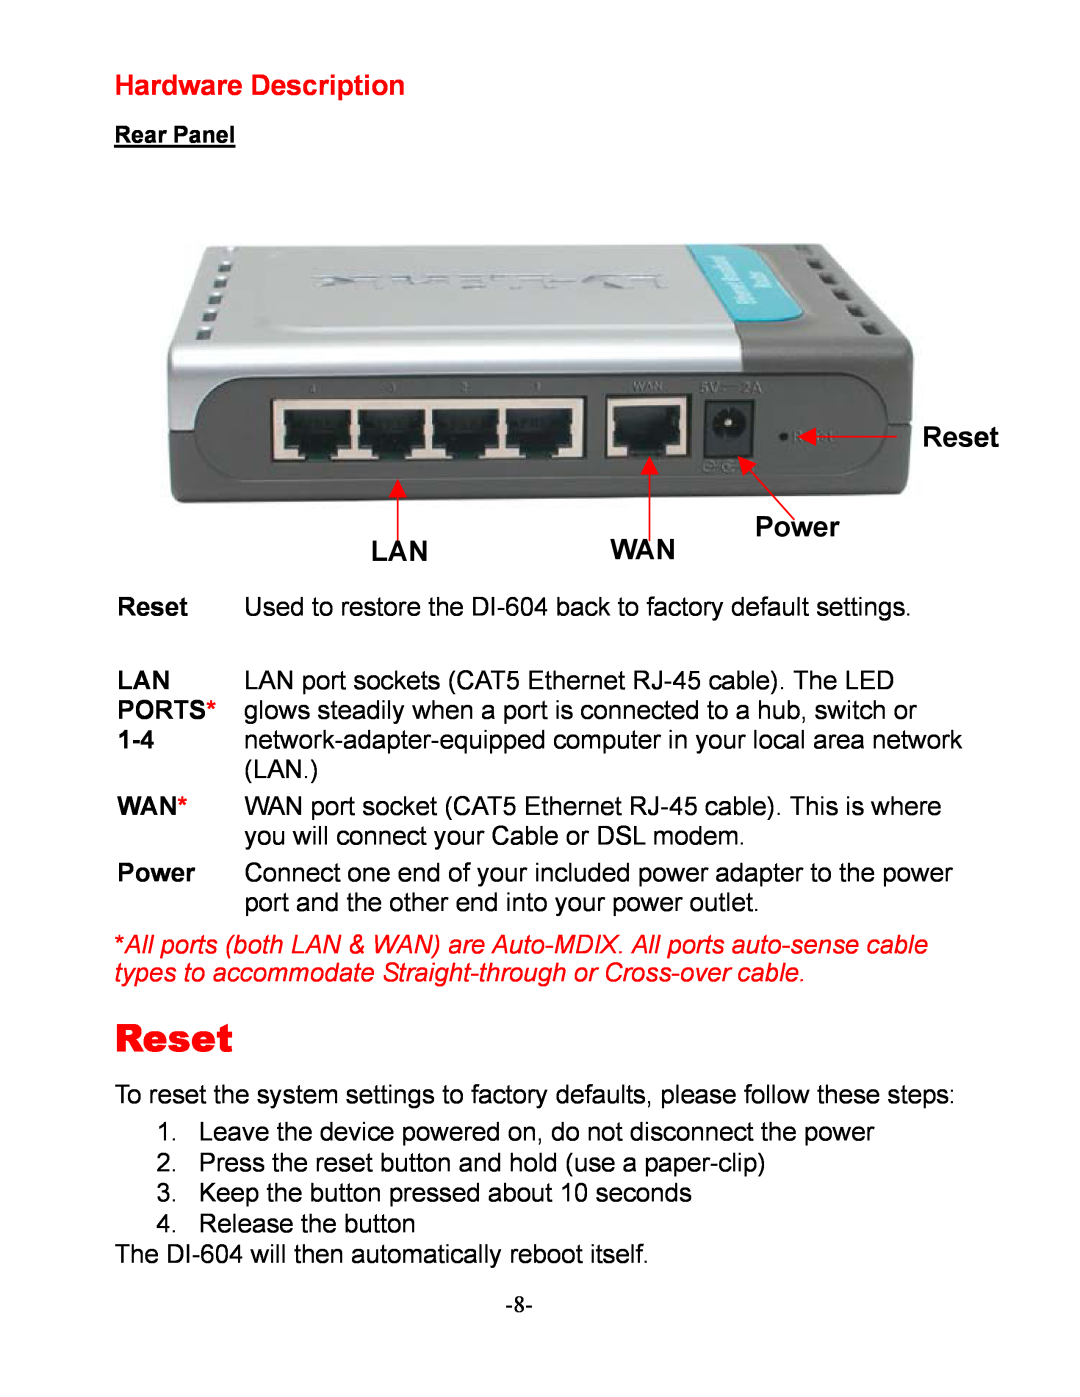 D-Link DI-604 manual Hardware Description, Lanwan, Reset Power 